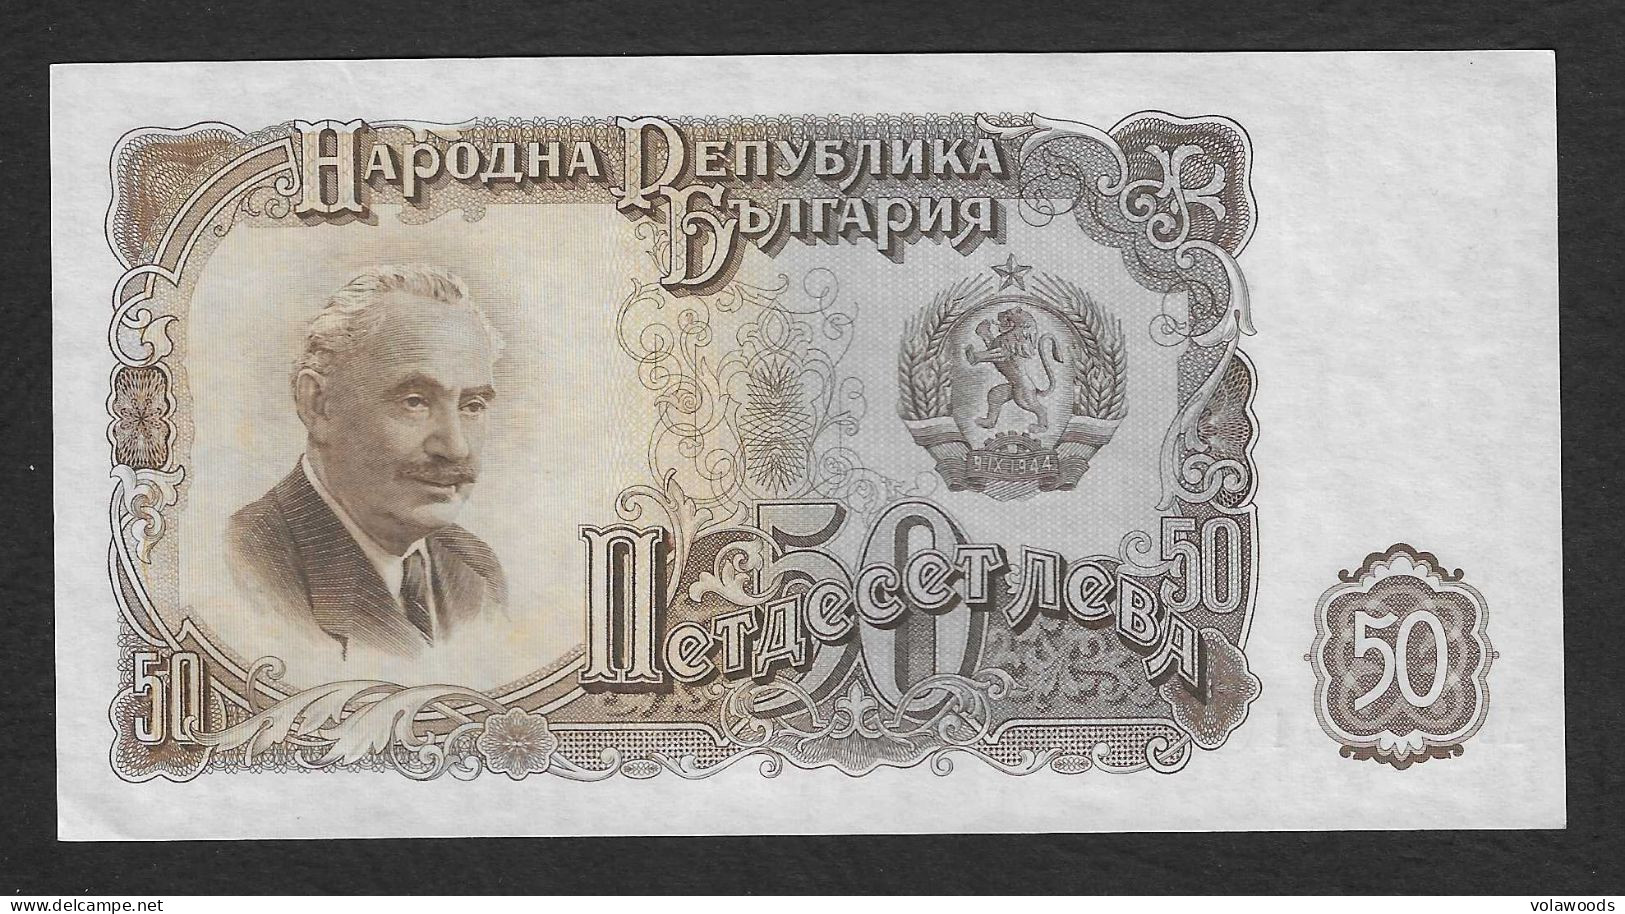 Bulgaria - Banconota Non Circolata FdS UNC Da 50 Leva P-85a - 1951 #17 - Bulgarien